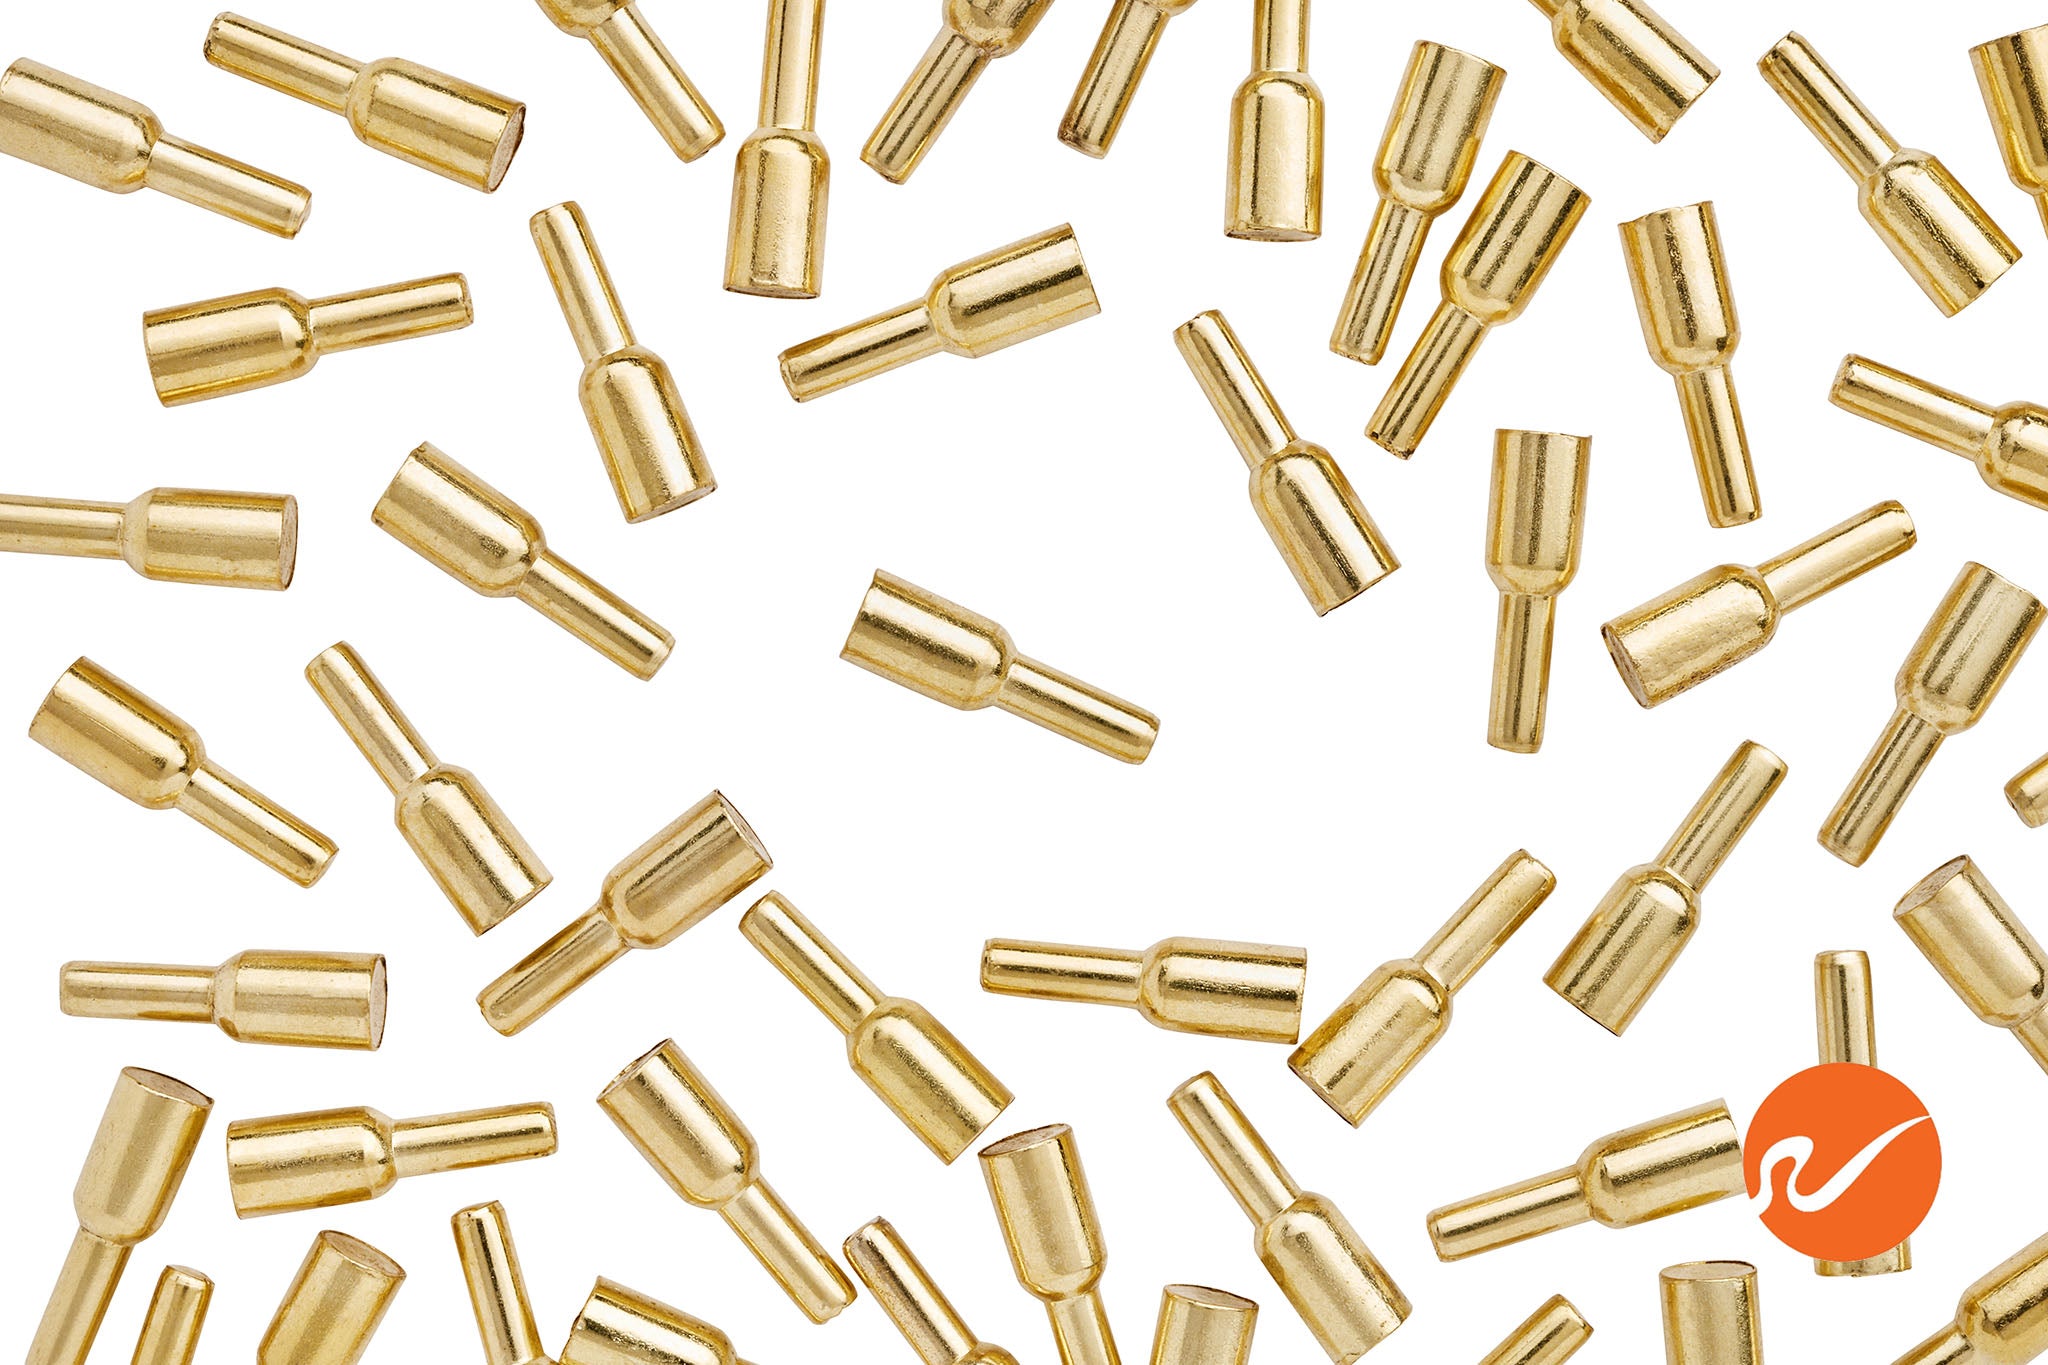 3mm Brass Shelf Pins - WidgetCo